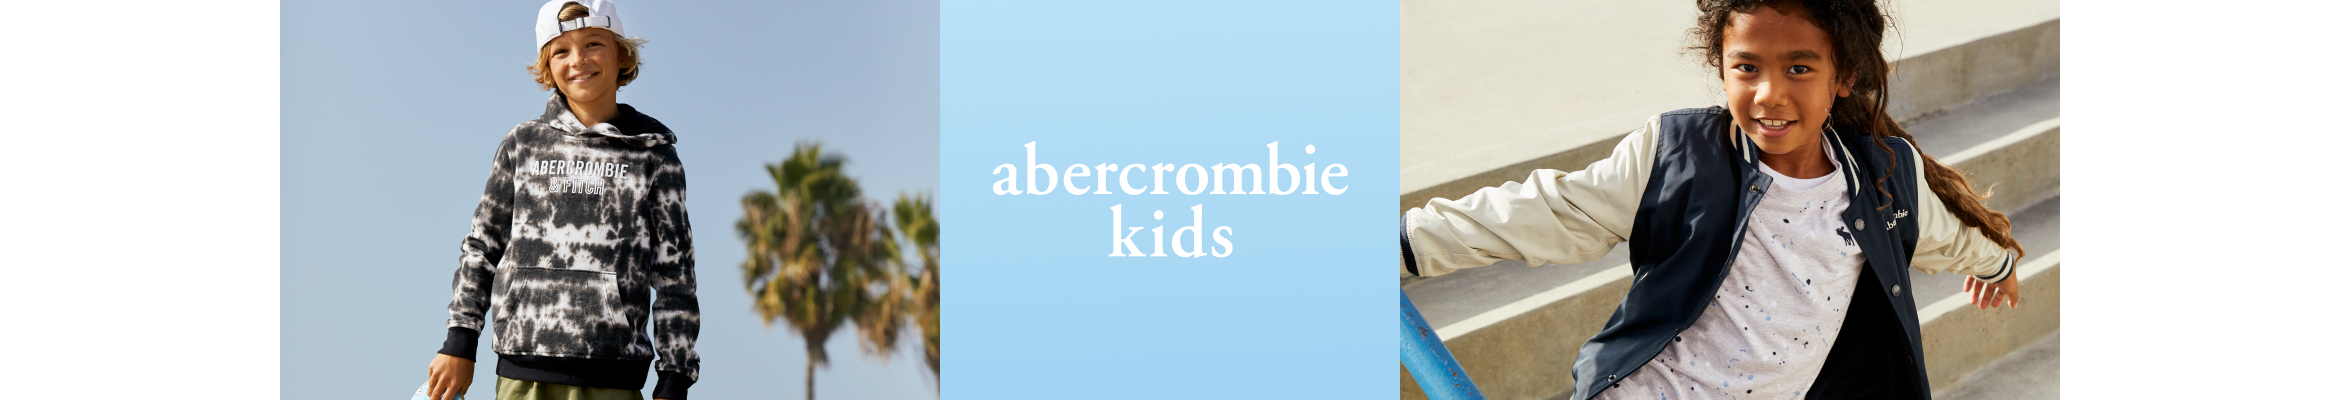 abercrombie kids shoes